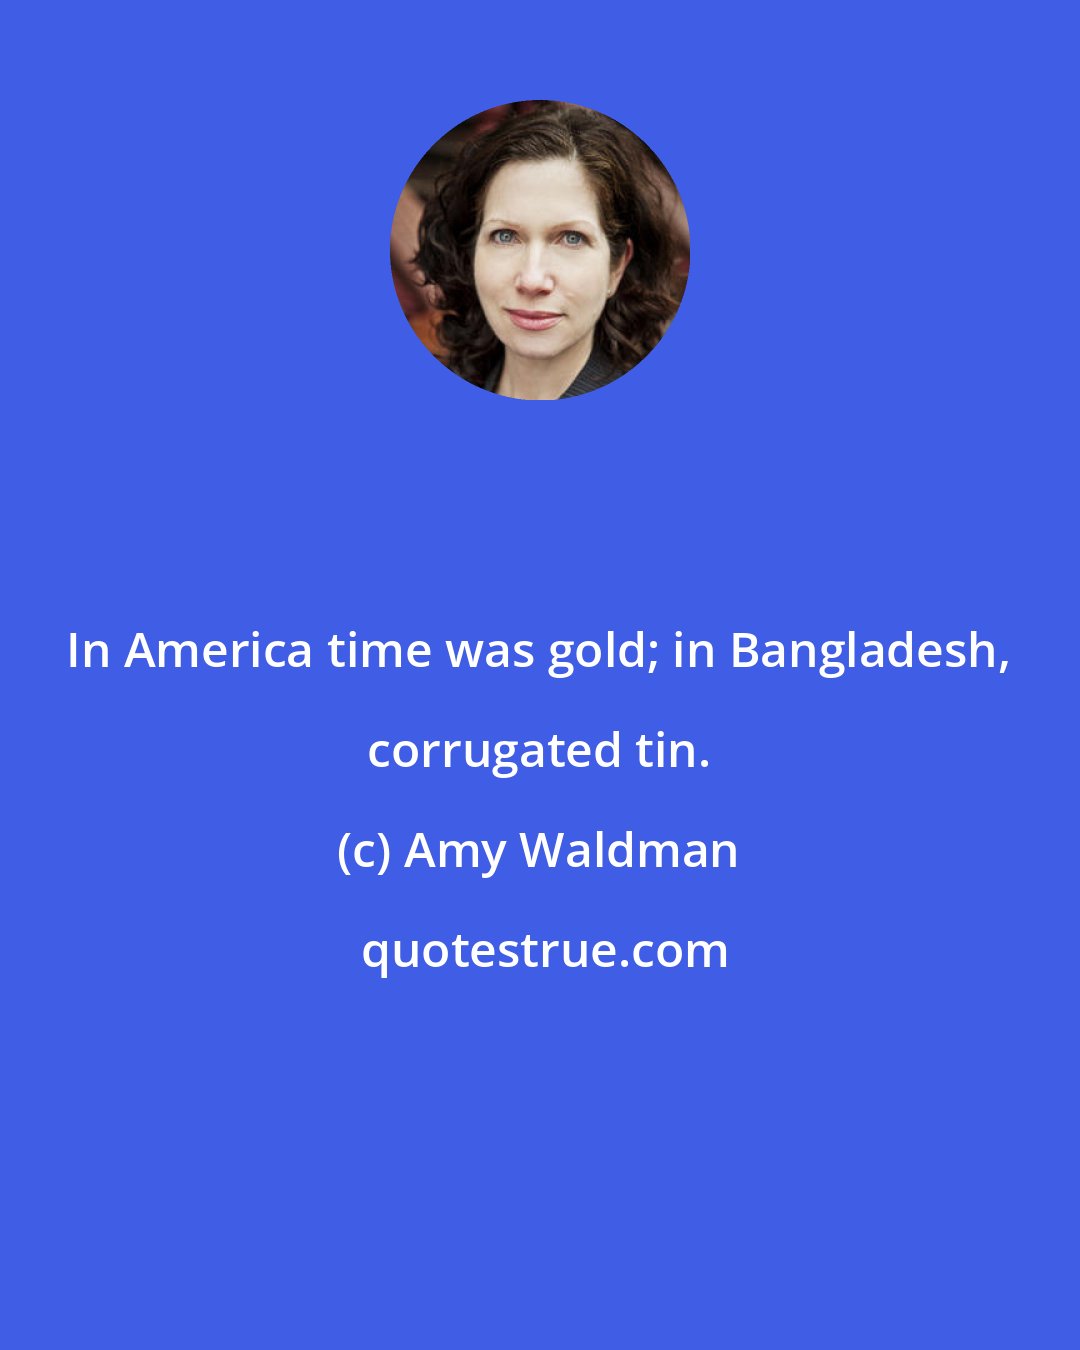 Amy Waldman: In America time was gold; in Bangladesh, corrugated tin.